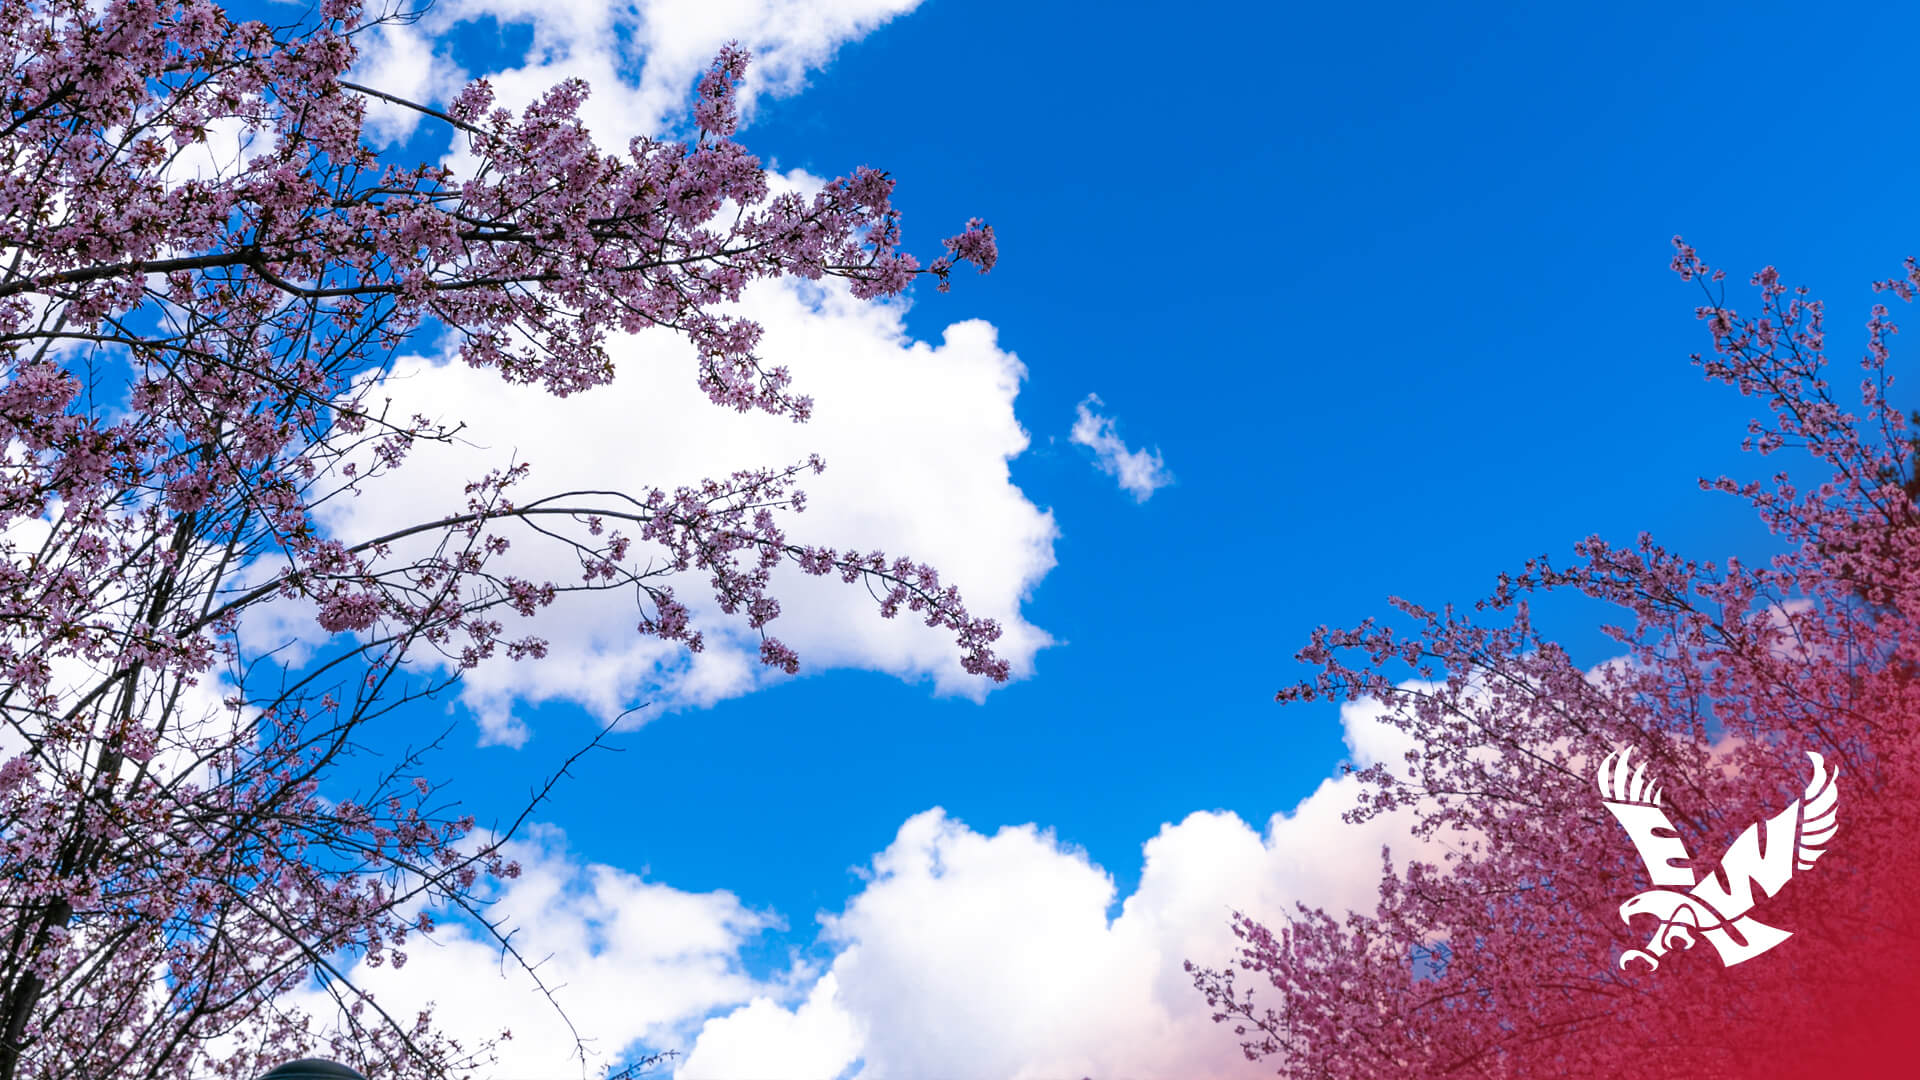 Cherry blossoms against a blue sky